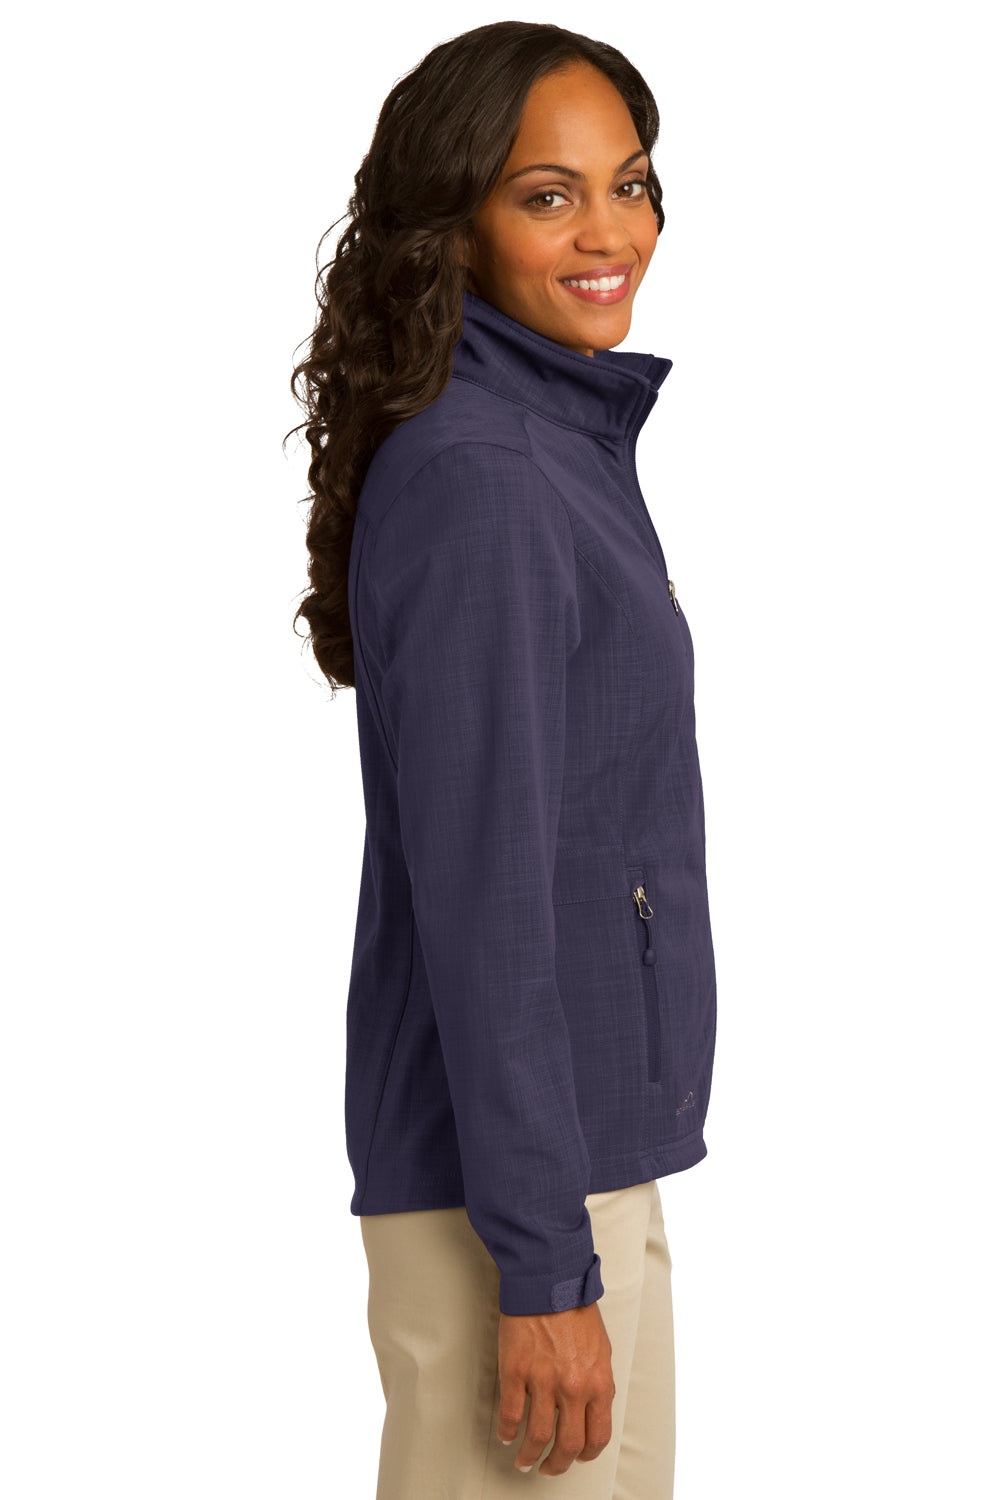 Eddie Bauer EB533 Womens Shaded Crosshatch Wind & Water Resistant Full Zip Jacket Purple Side